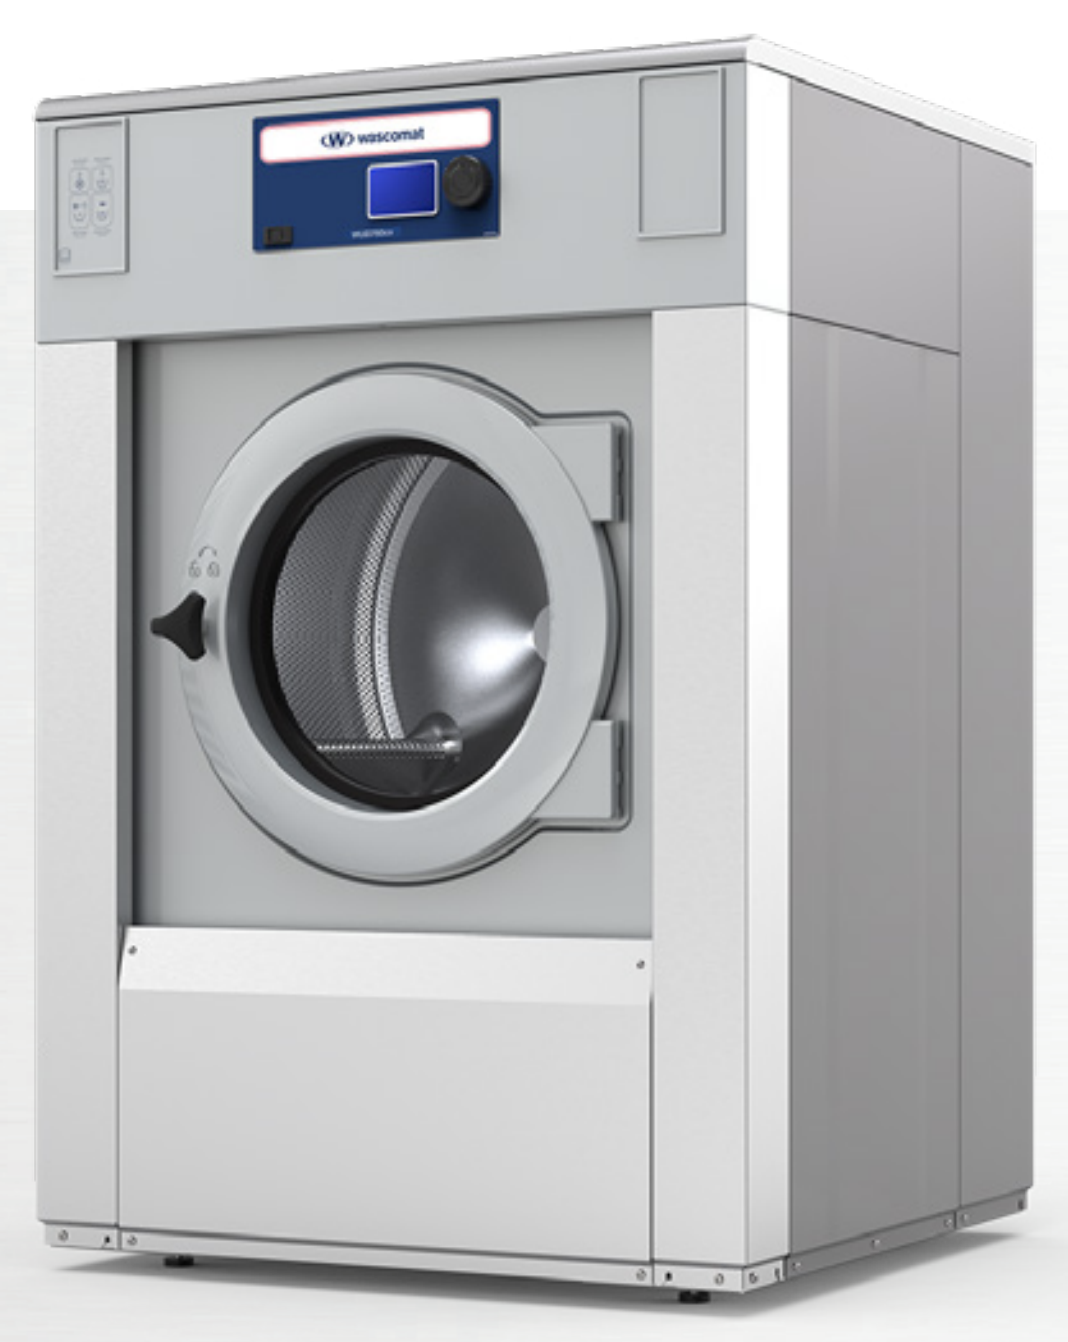 New 2022 Wascomat Wud760 Opl - Automatic Laundry Service Of Va, Inc.